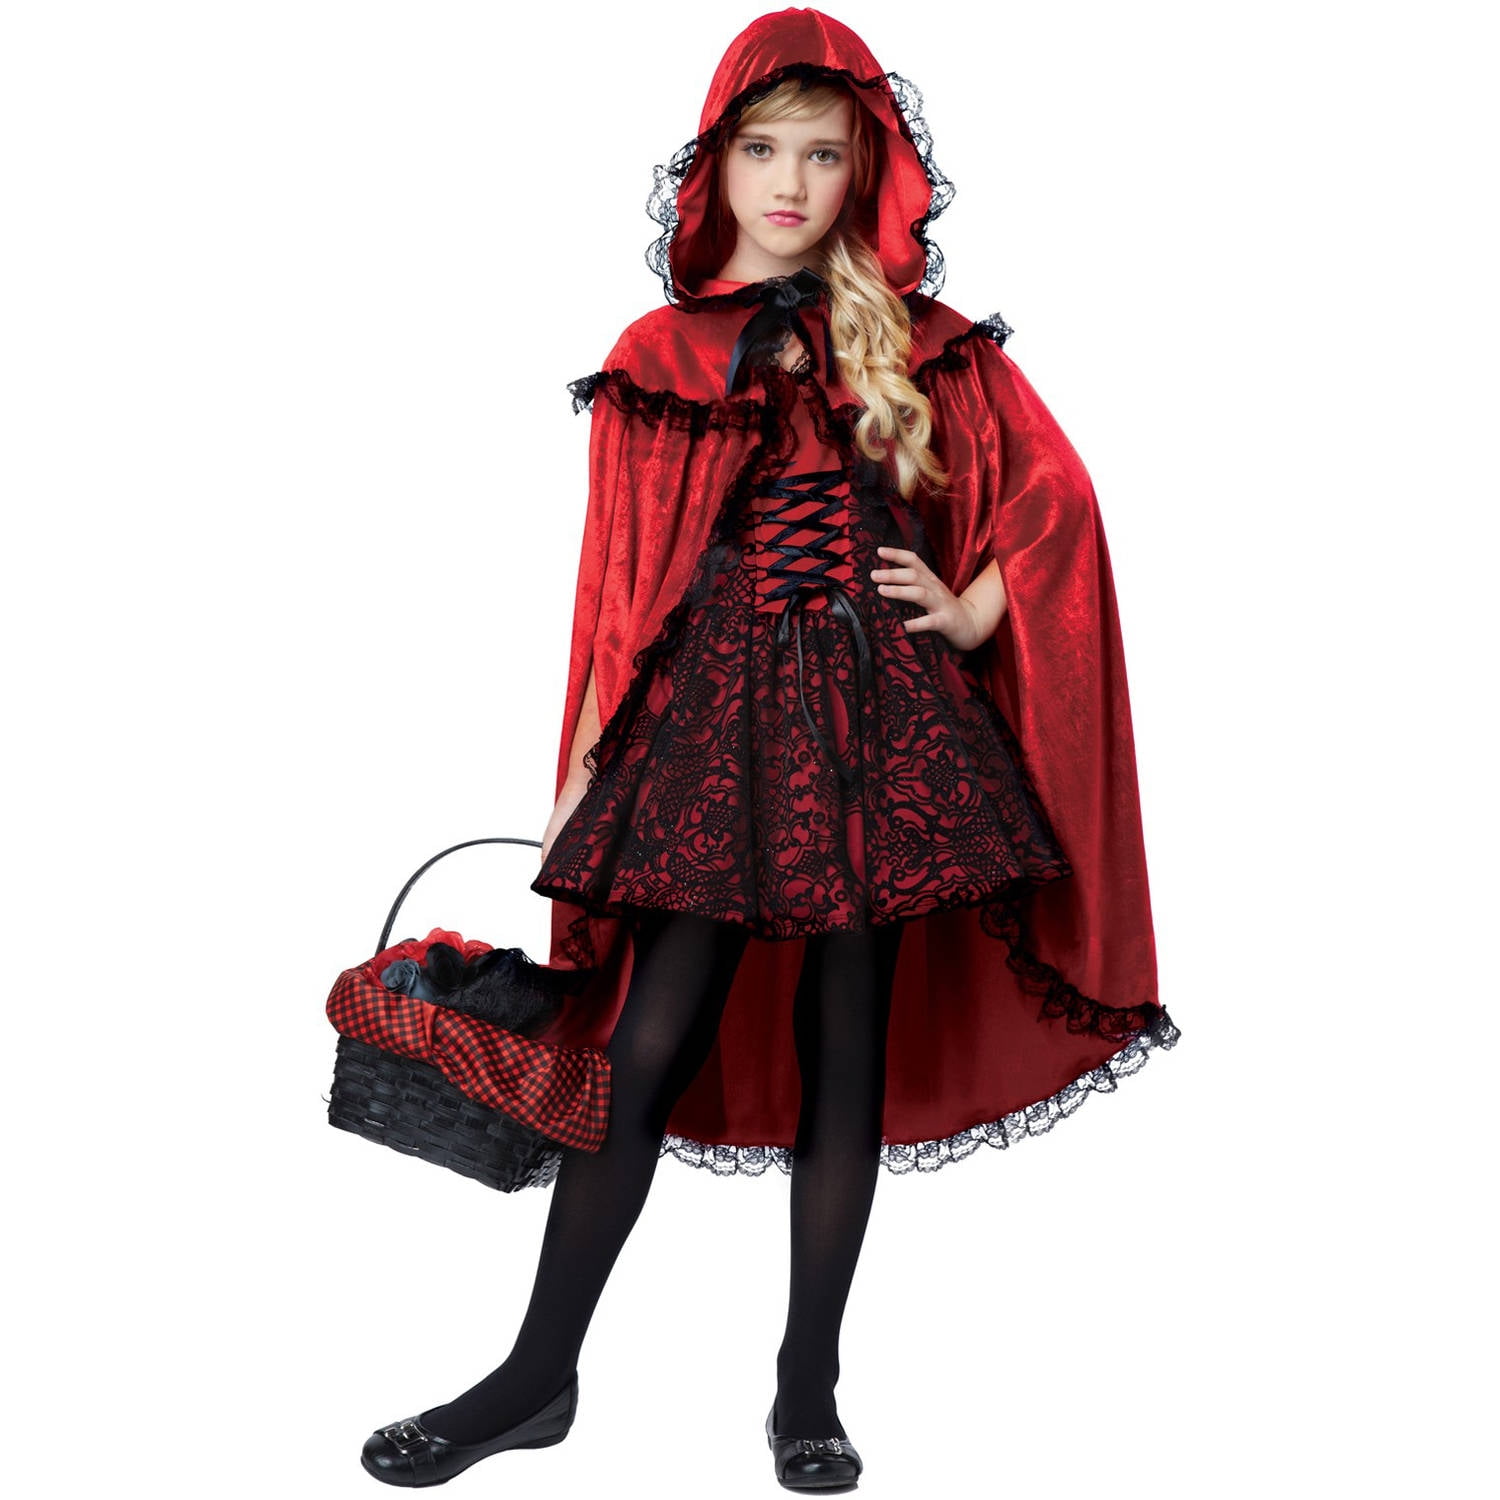 Ladies Red Riding Hood Cape Long Hooded Cloak Halloween Fancy Dress Costume New 